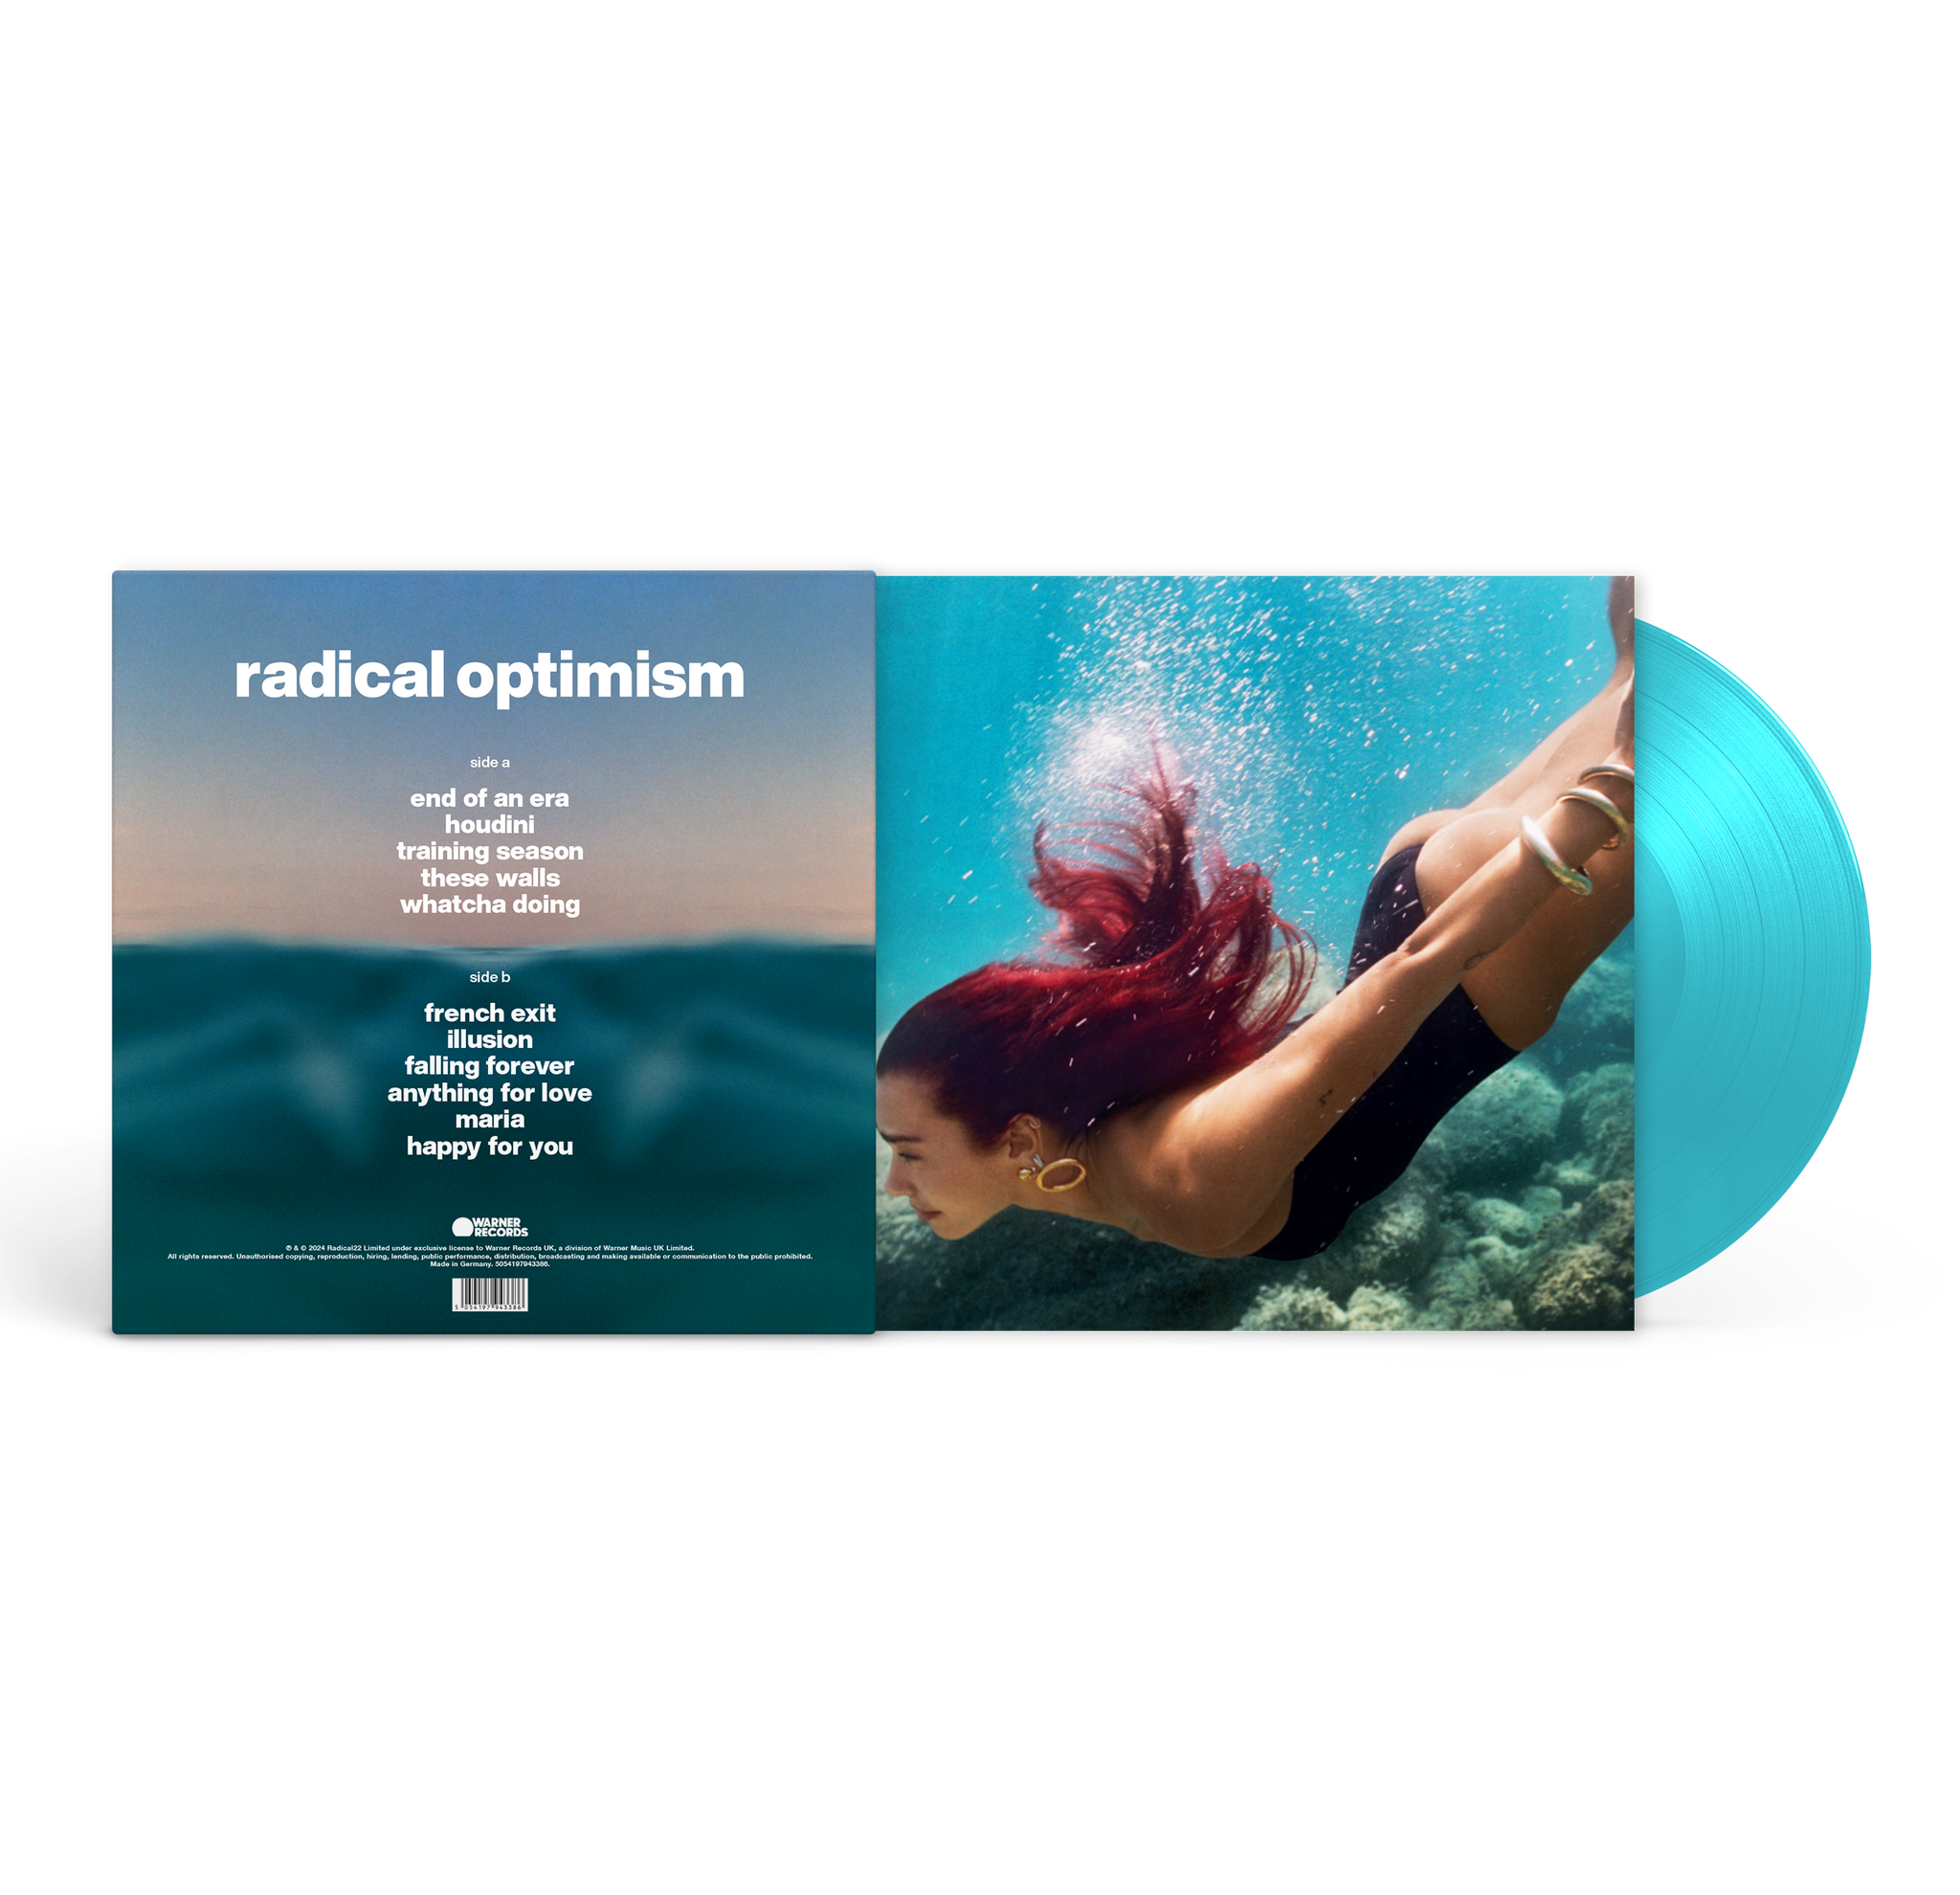 DUA LIPA - Radical Optimism - LP - Curacao Blue Vinyl [MAY 3]